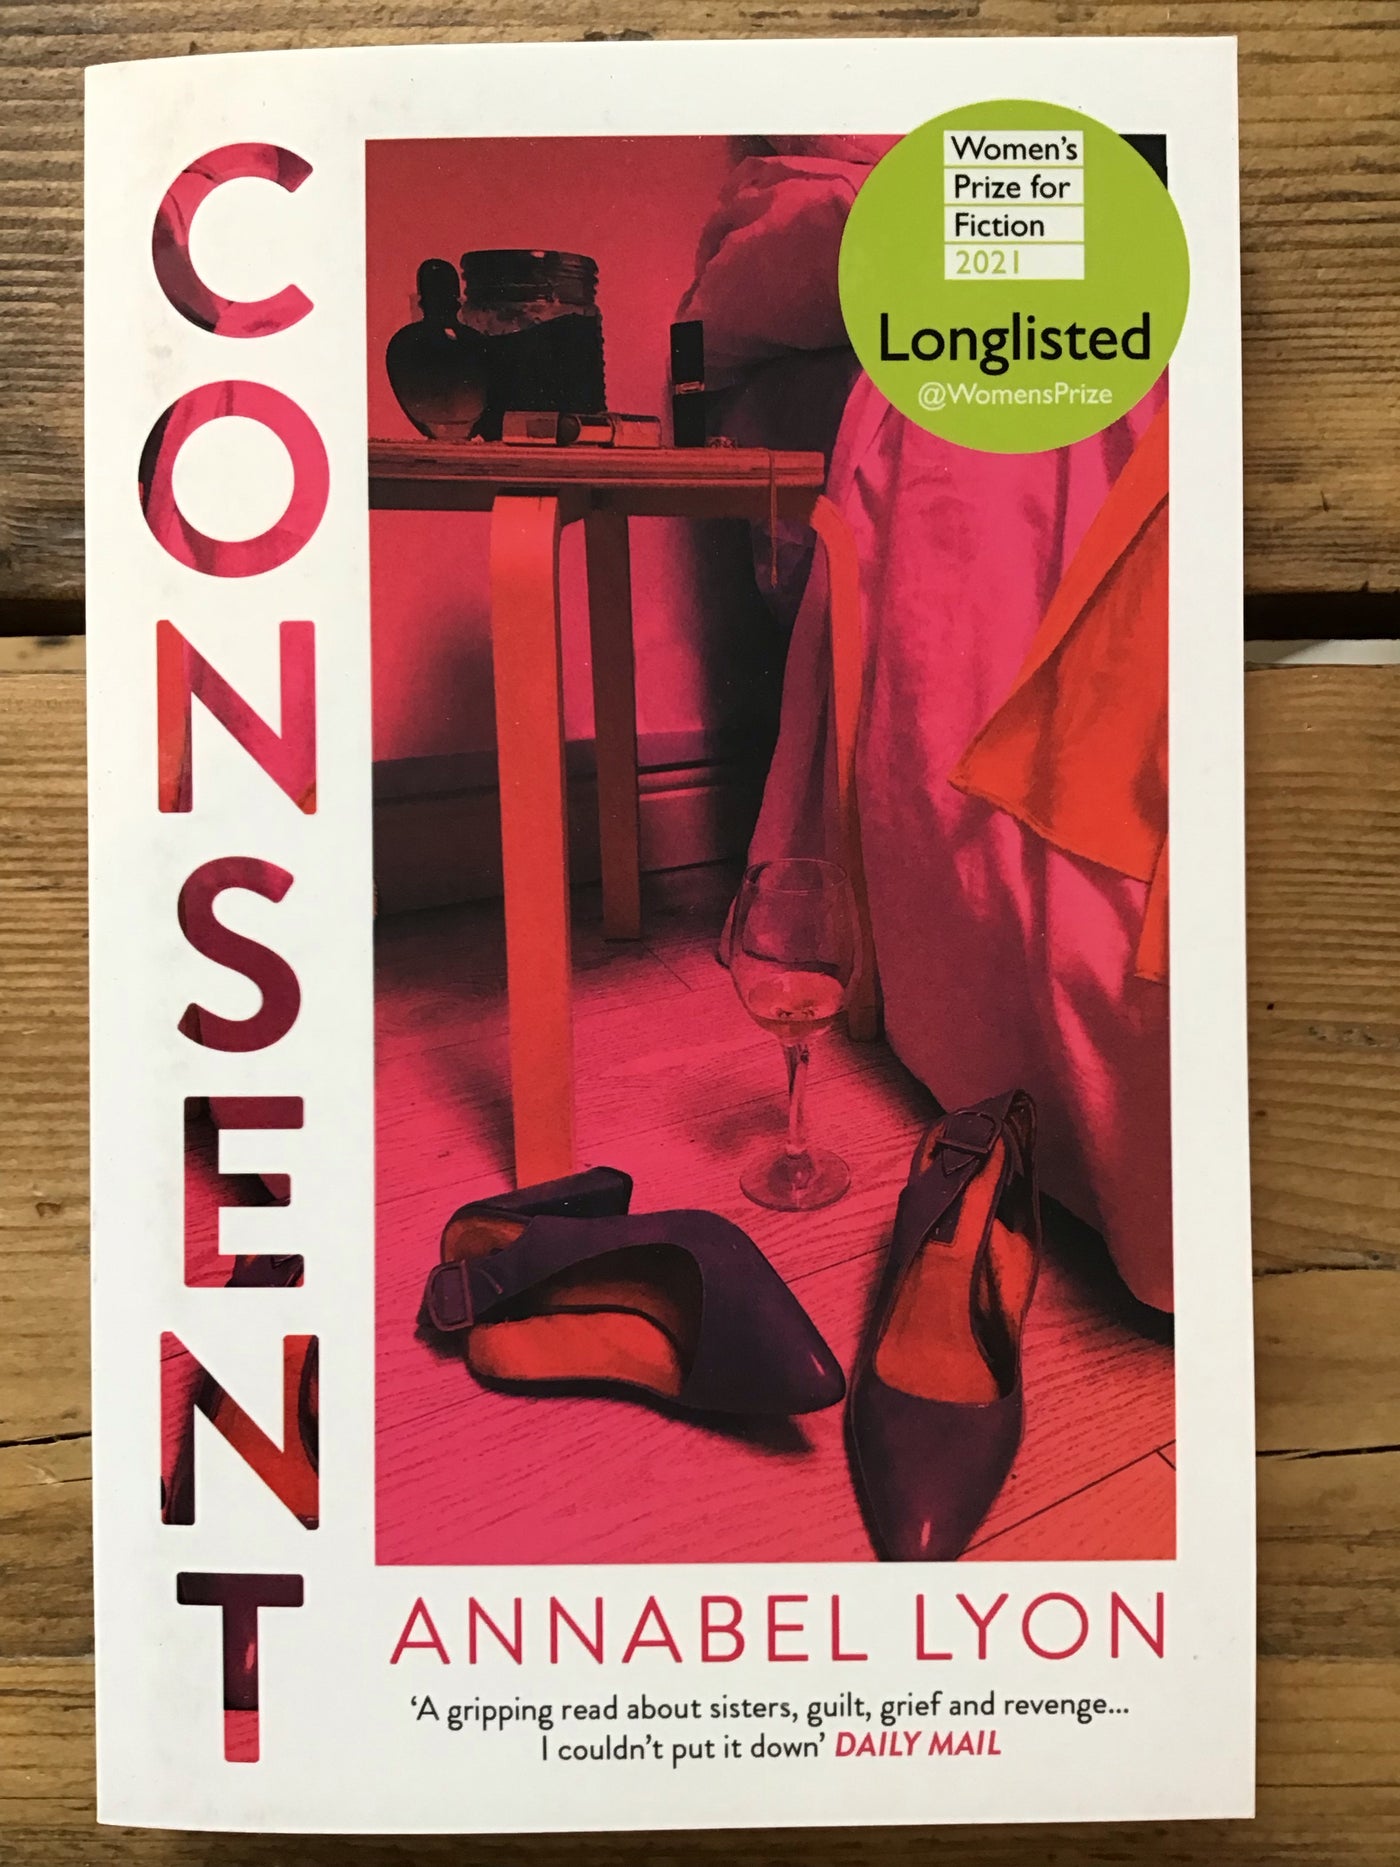 Consent